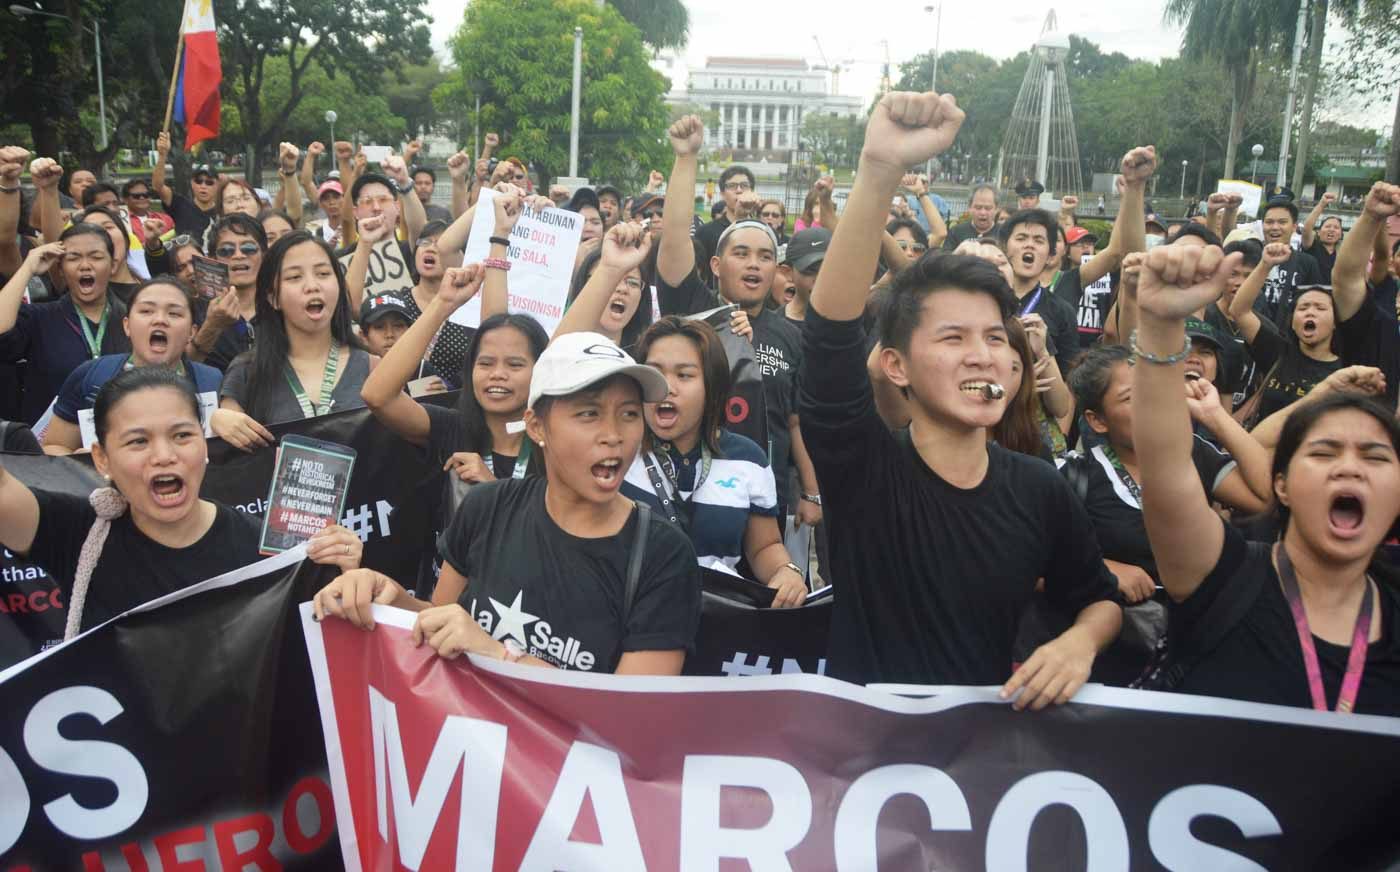 “Negros Occidental tidak akan mengizinkan” Marcoses kembali berkuasa